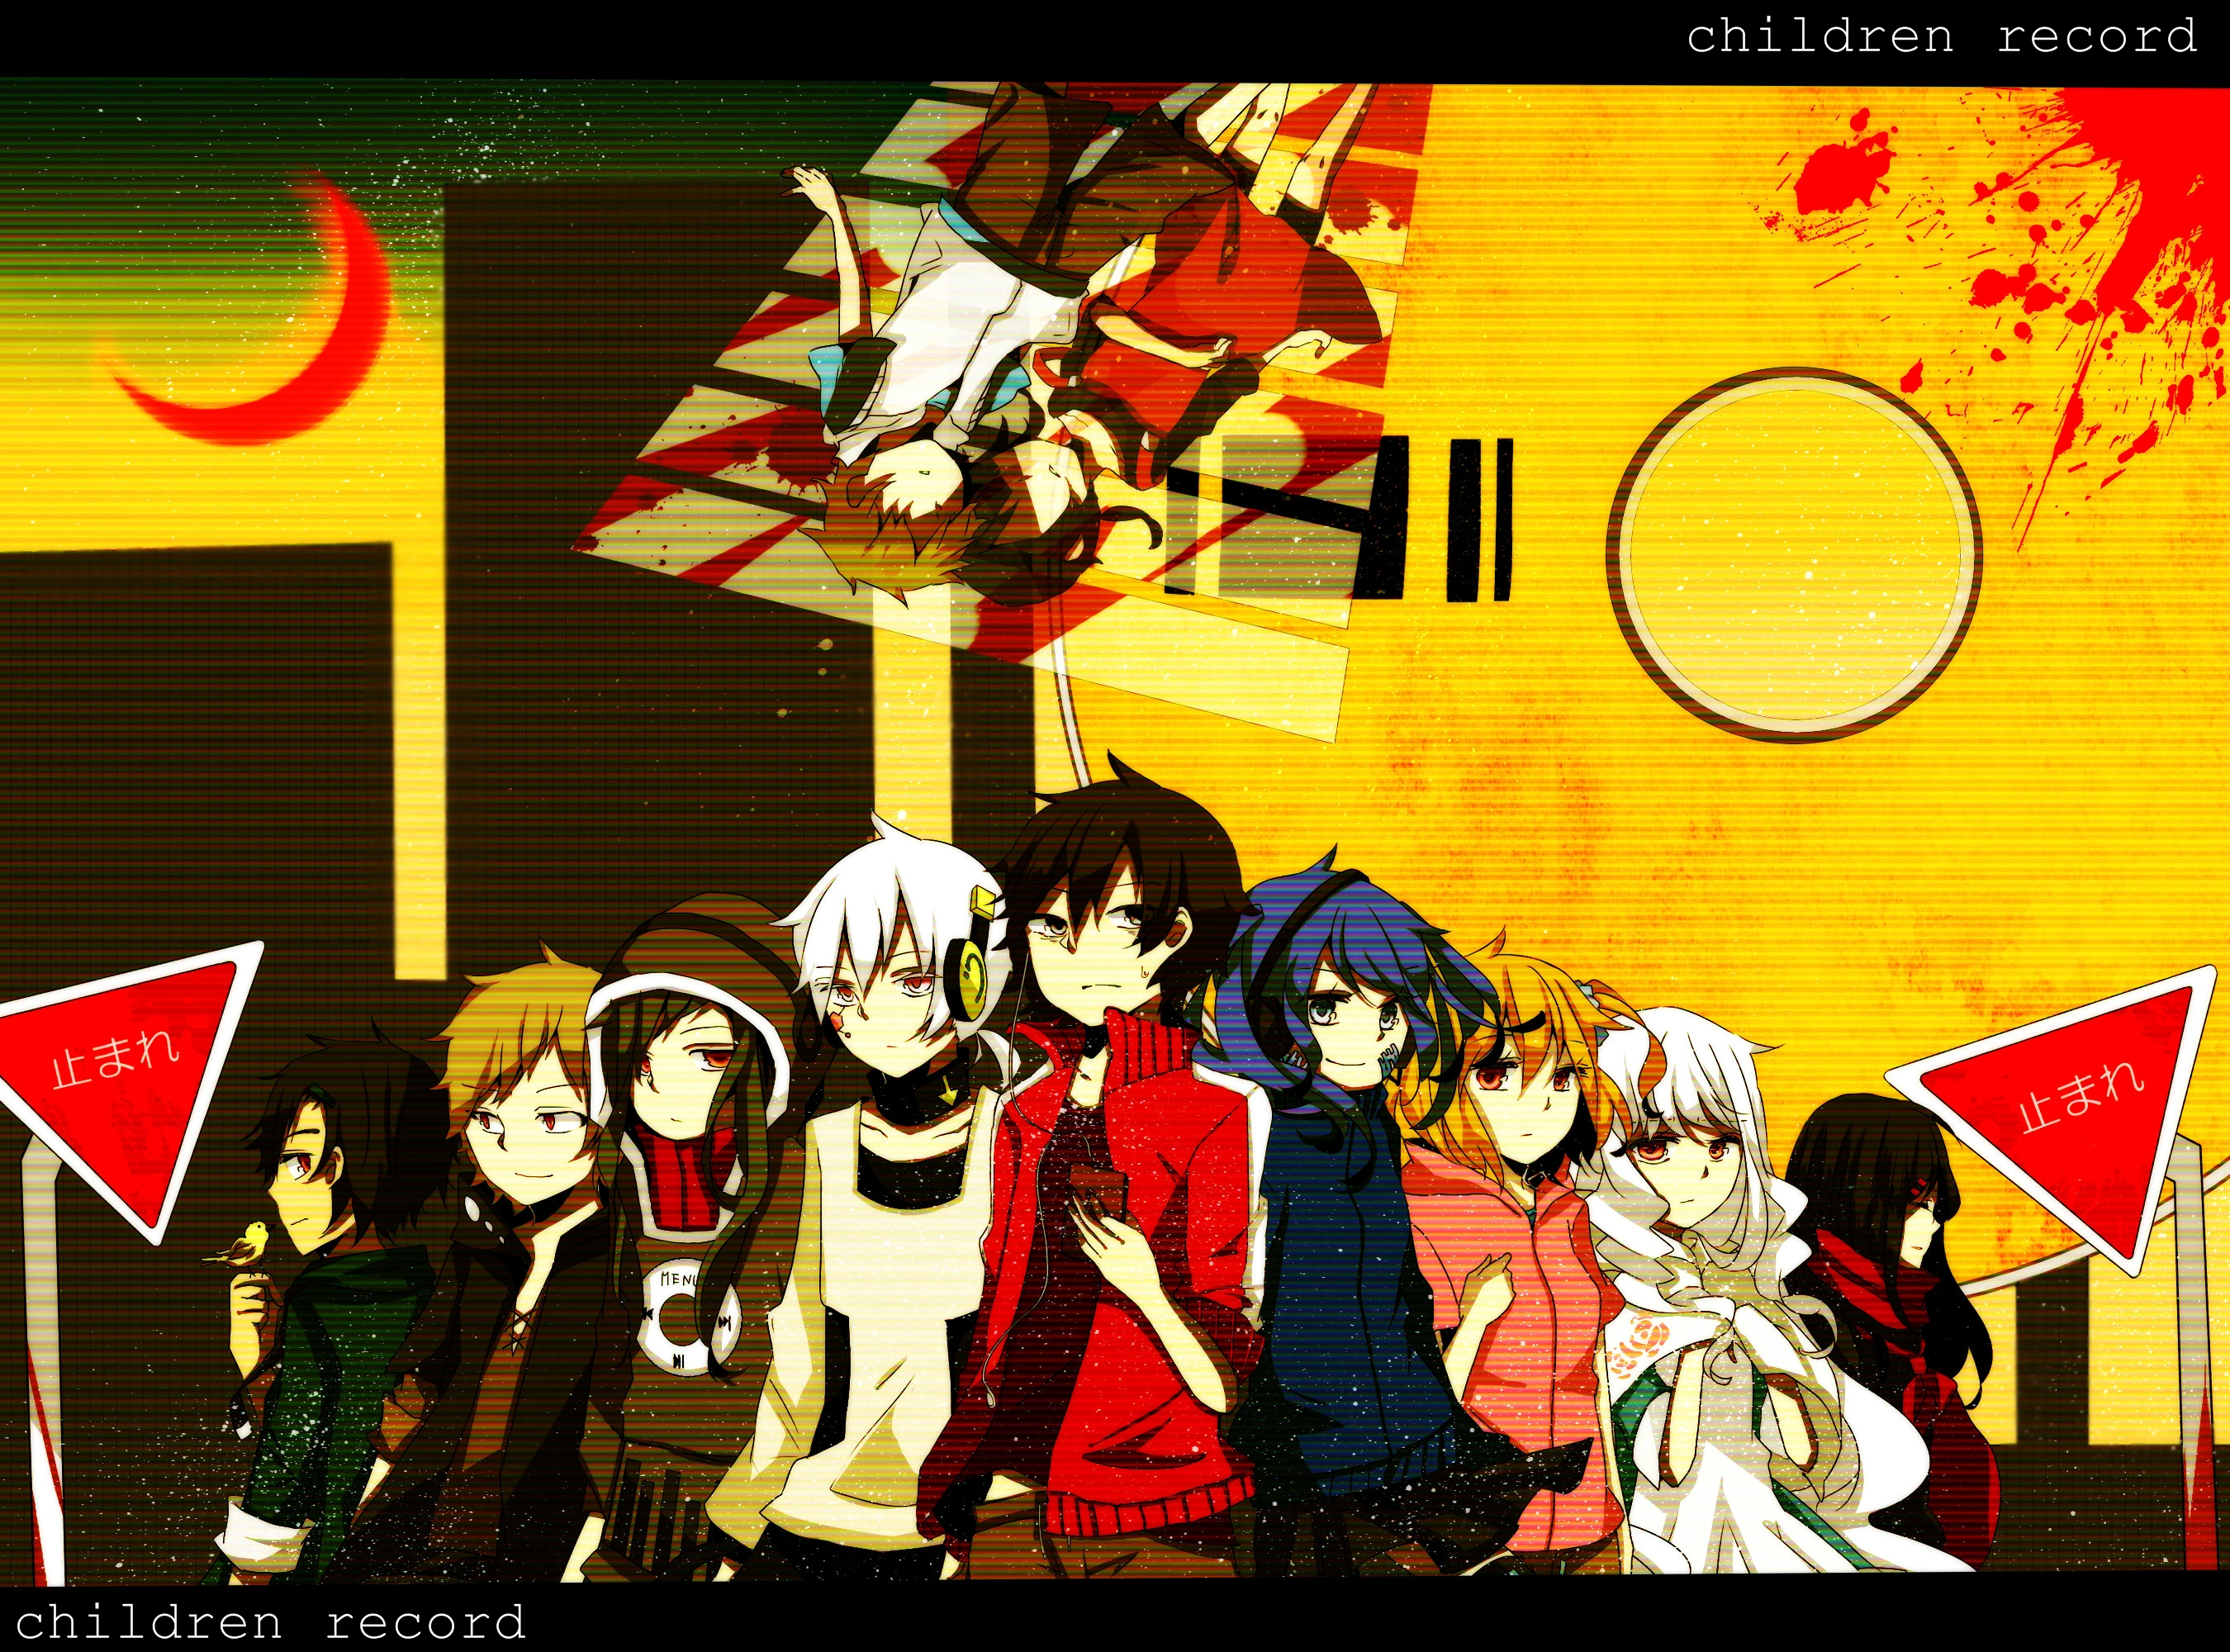 Anime Kagerou Project Wallpaper